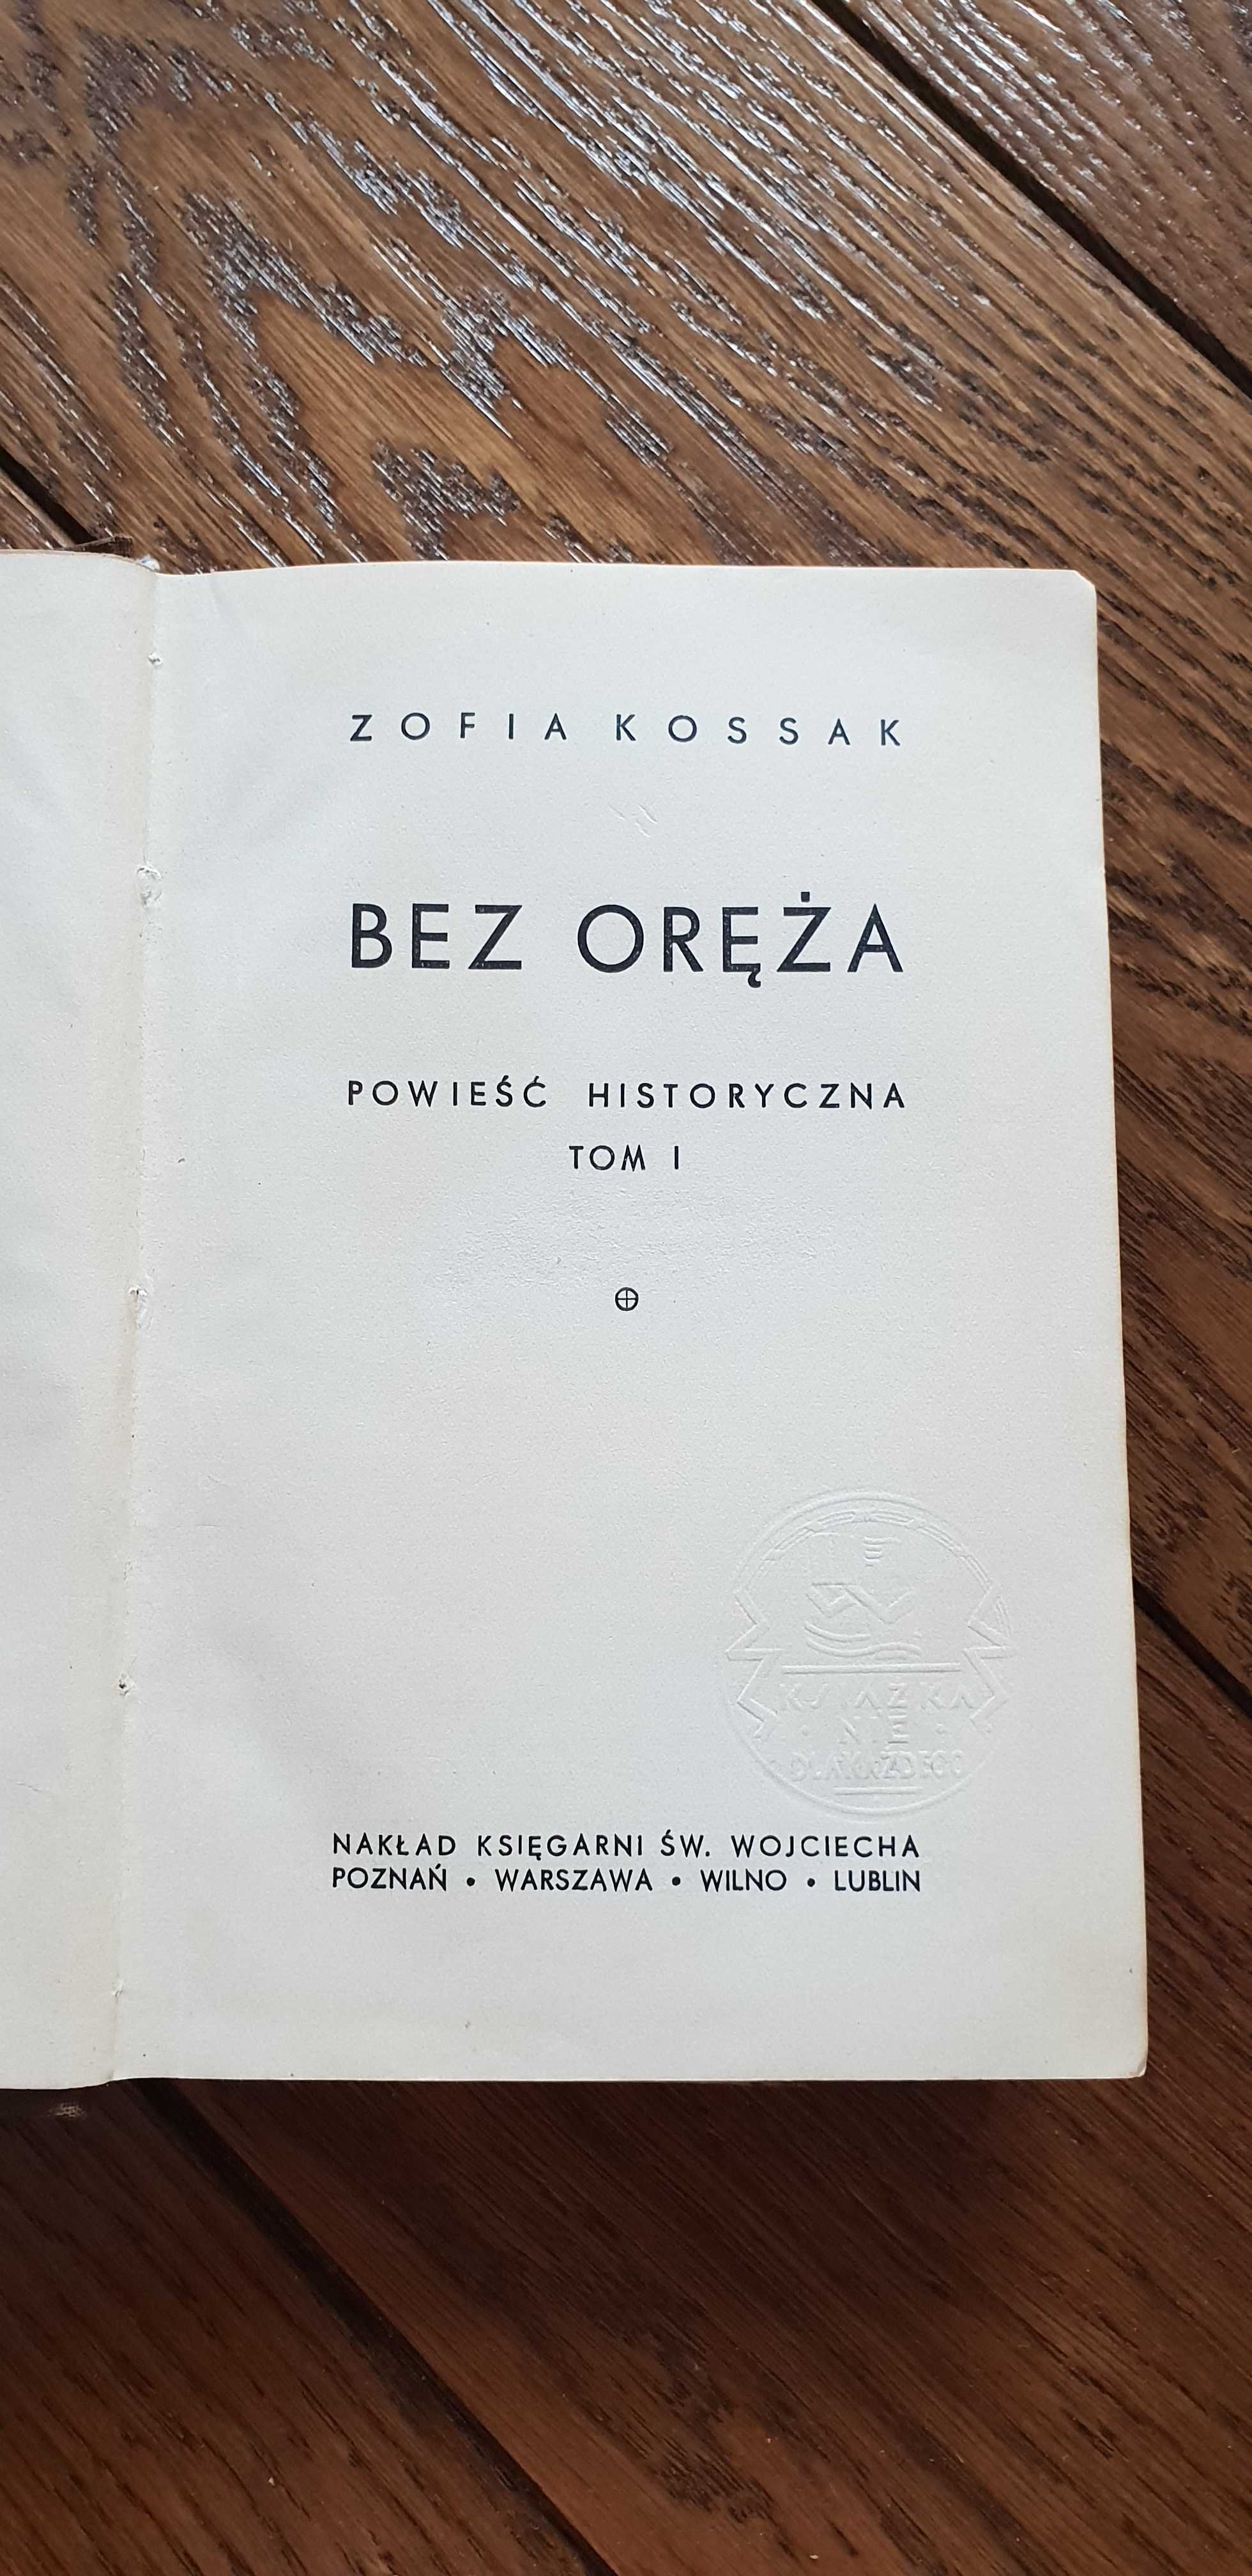 Książka rok 1937 "Bez Oręża" Zofia Kossak - tom I